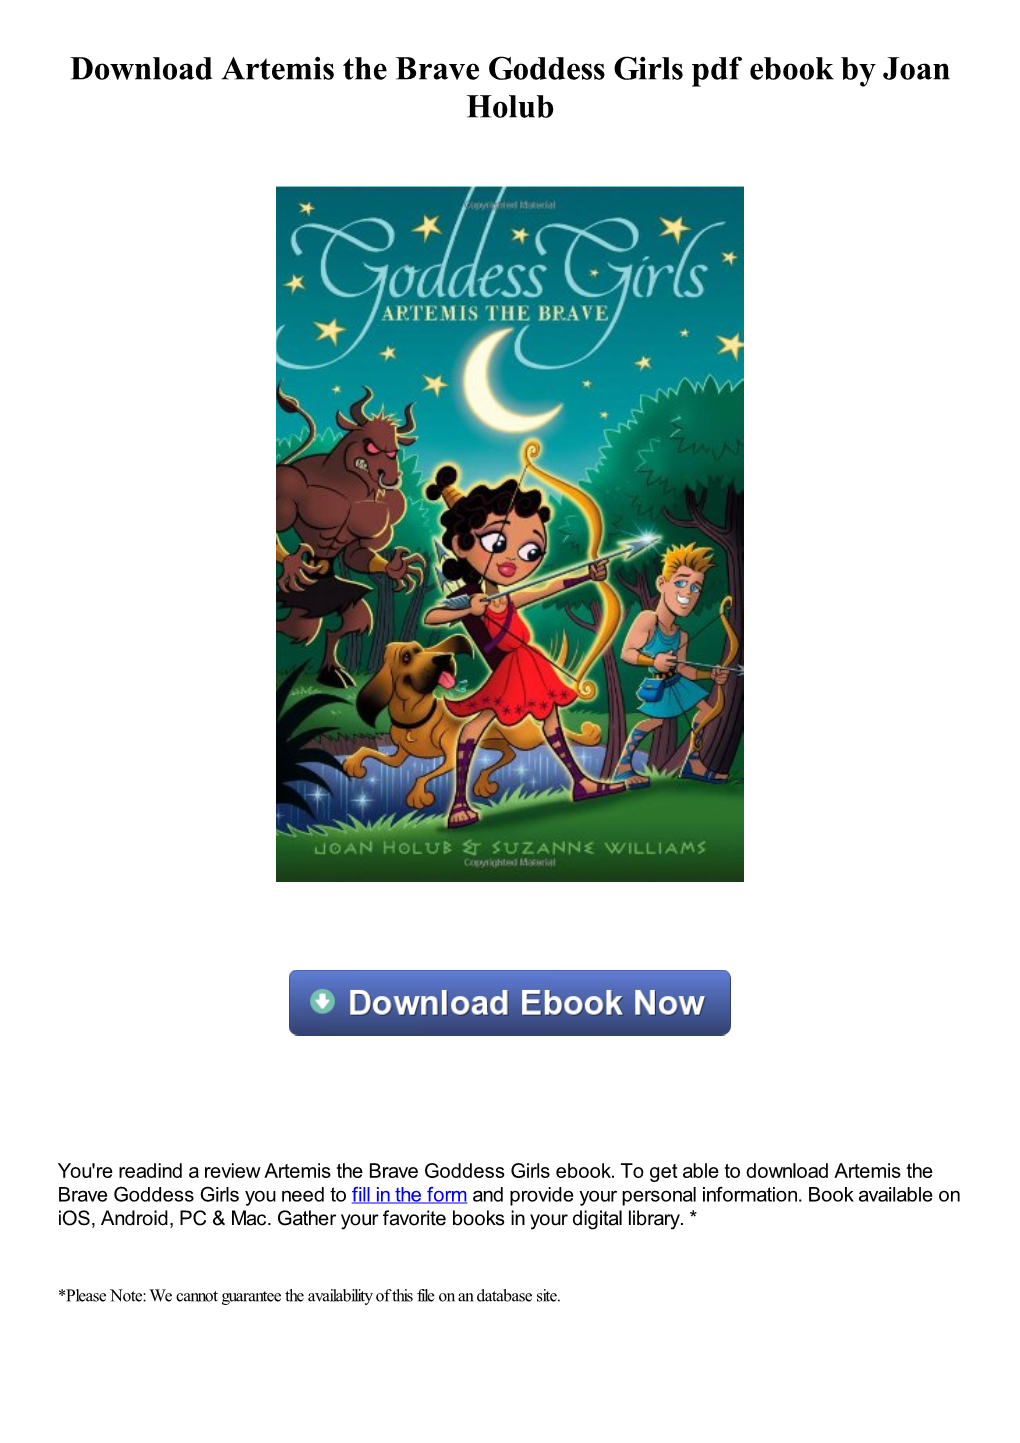 Download Artemis the Brave Goddess Girls Pdf Book by Joan Holub